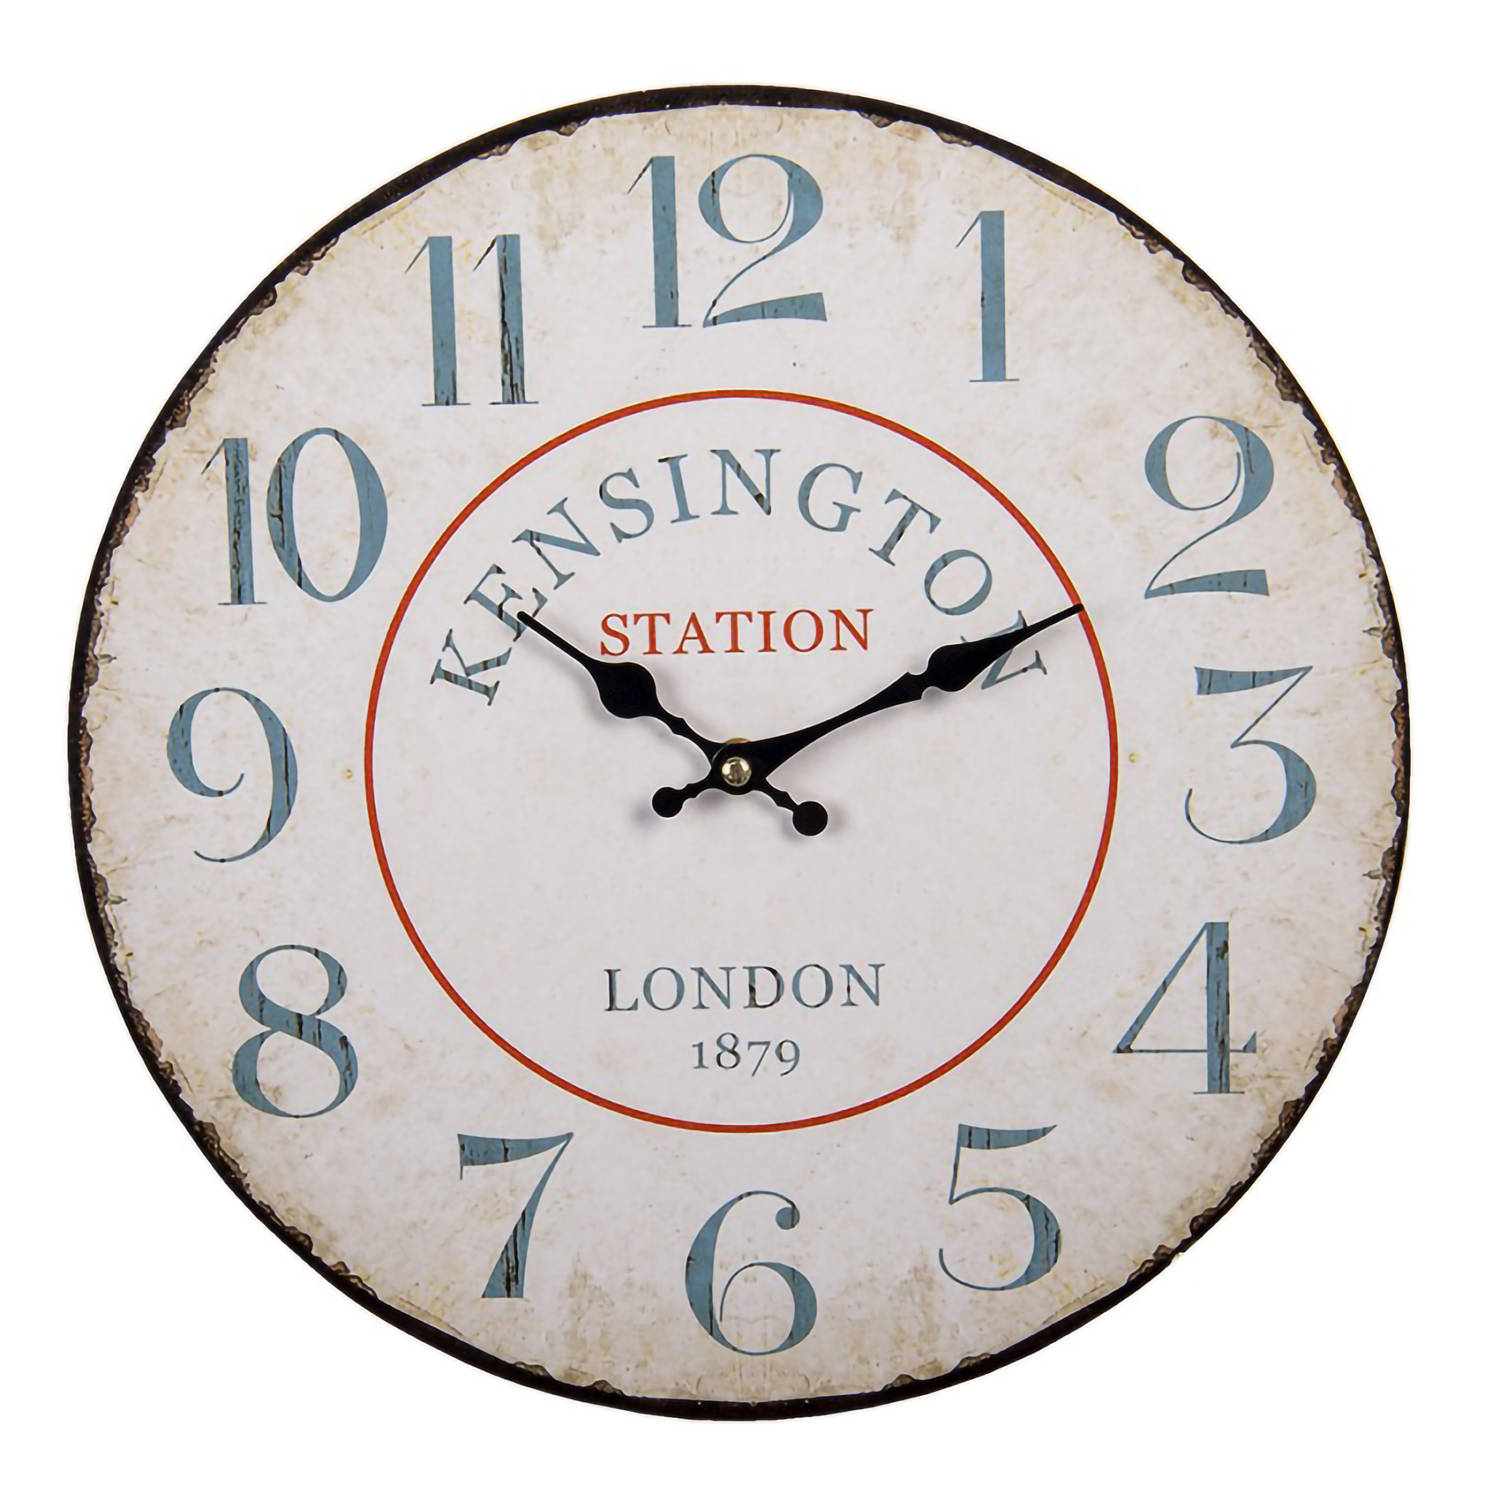 HAES DECO - Wandklok 34 cm Vintage Wit met tekst Kensington Station - Wijzerplaat met Cijfers - Ronde MDF Klok - Muurklok Hangklok Keukenklok